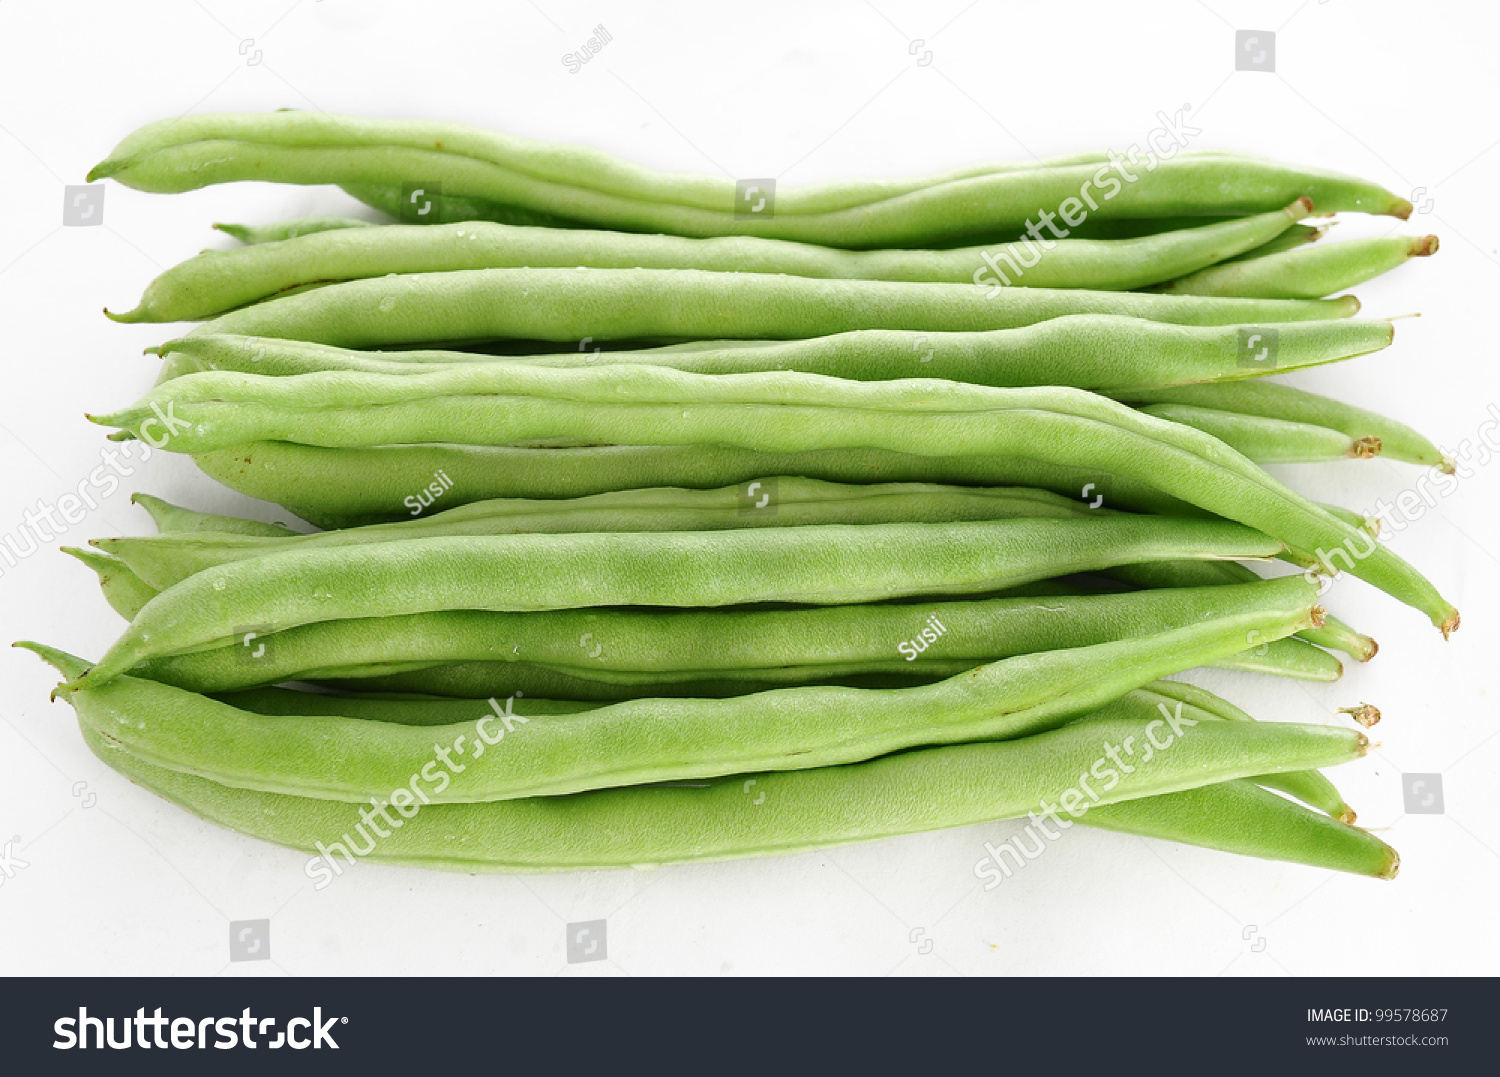 Green Beans On White Background Stock Photo 99578687 - Shutterstock